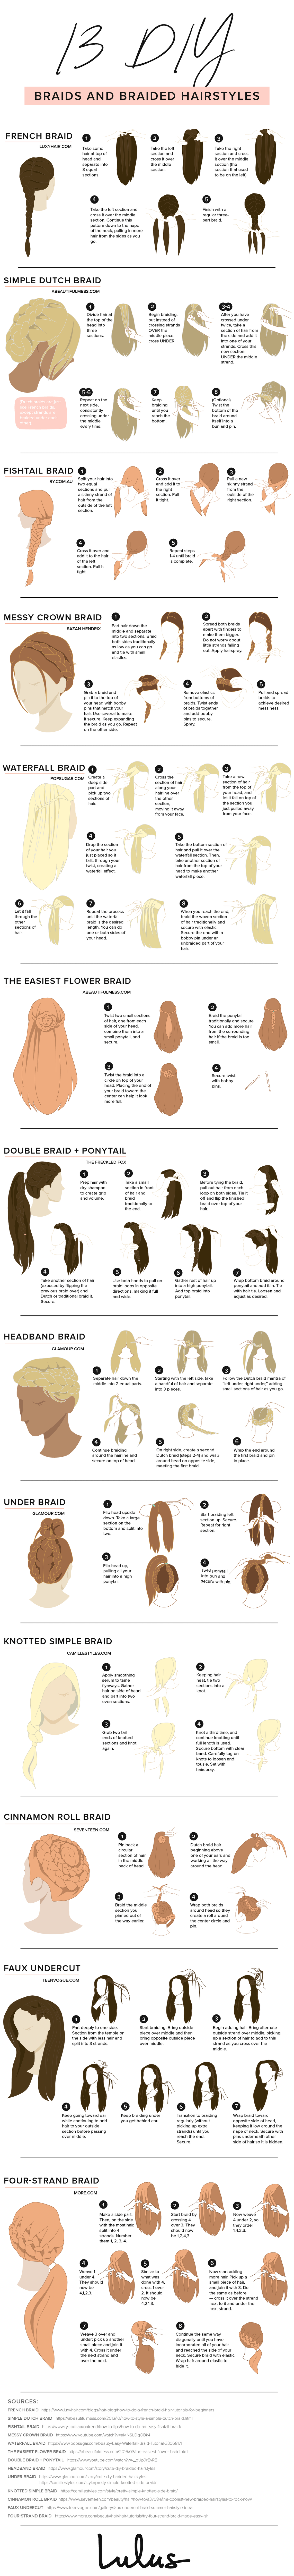 13 diy braid braided hairstyles